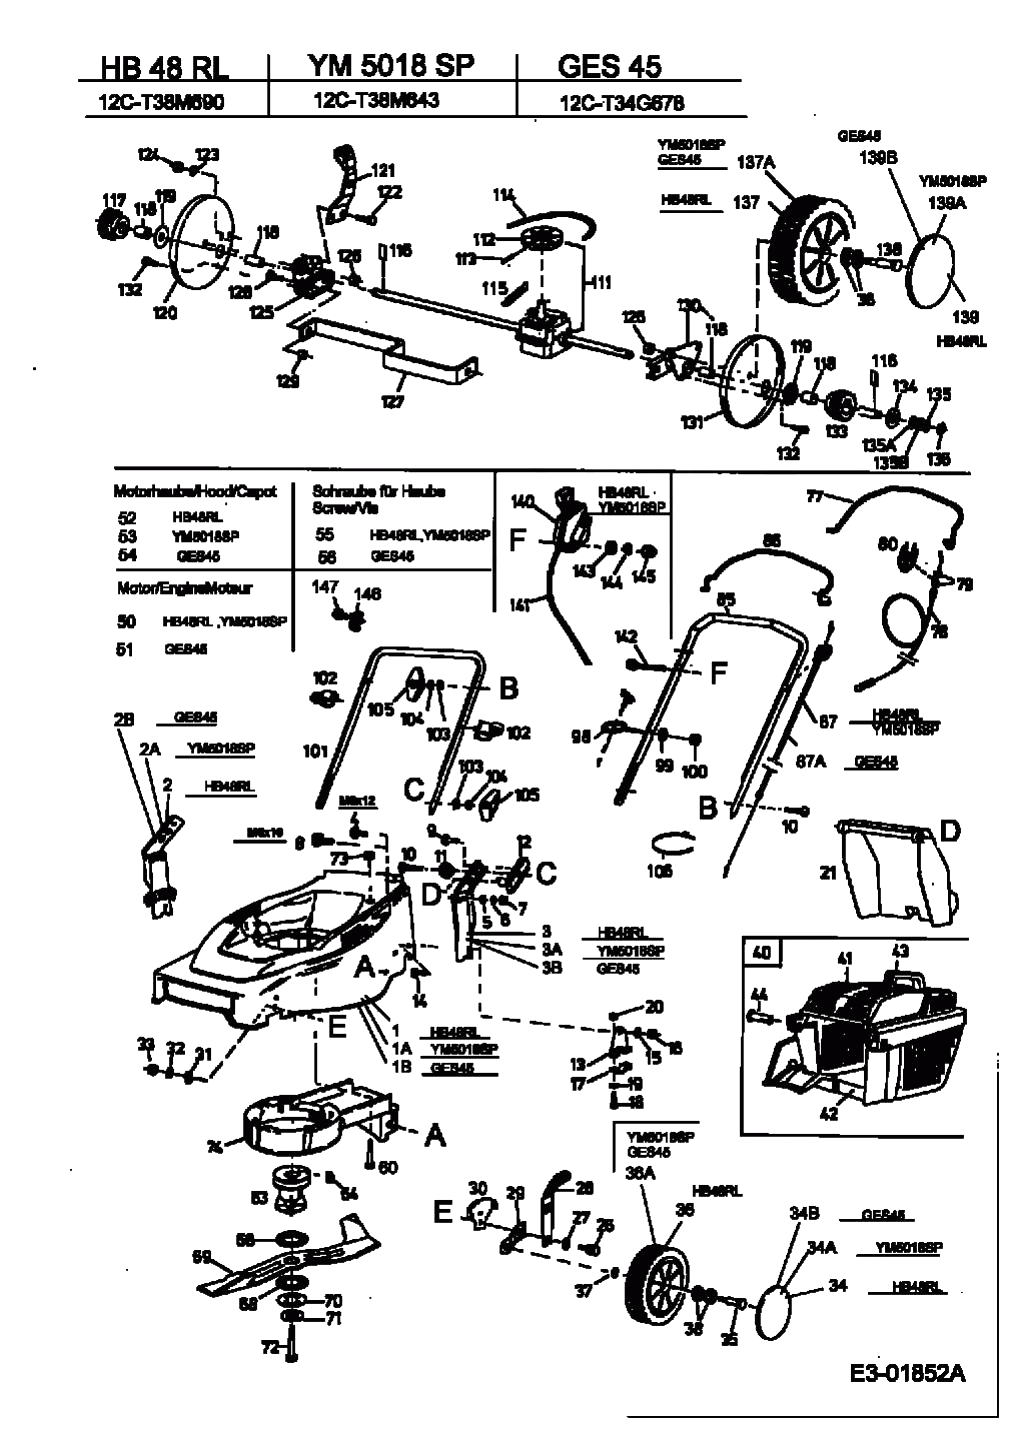 MTD Артикул 12C-T34G678 (год выпуска 2003). Основная деталировка